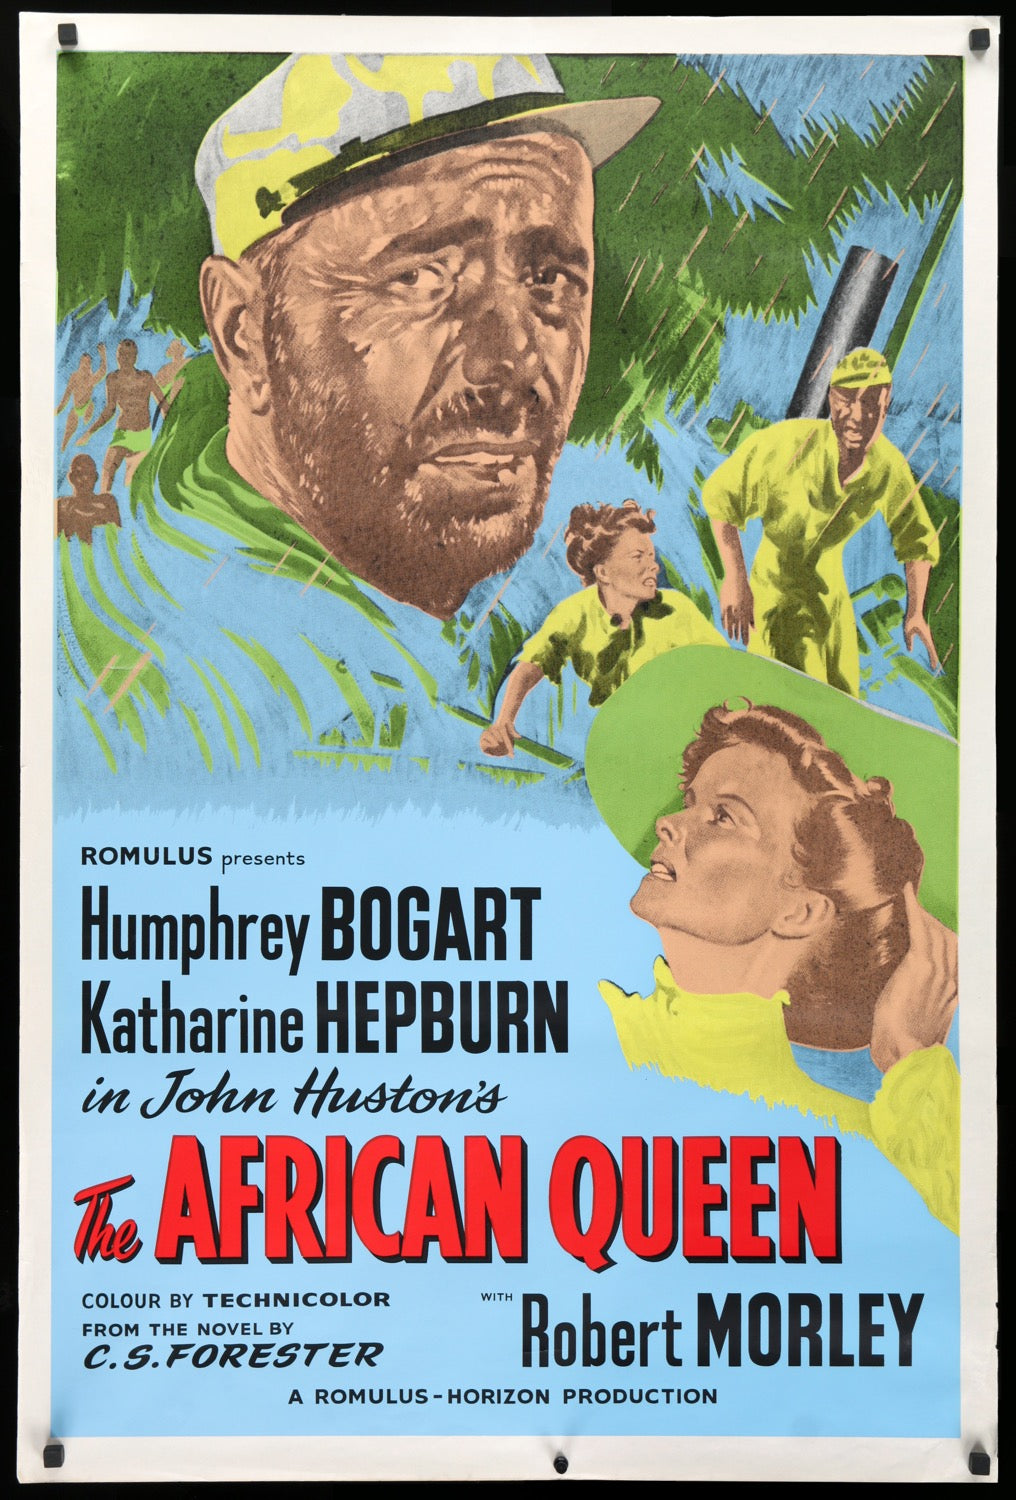 African Queen (1952) original movie poster for sale at Original Film Art